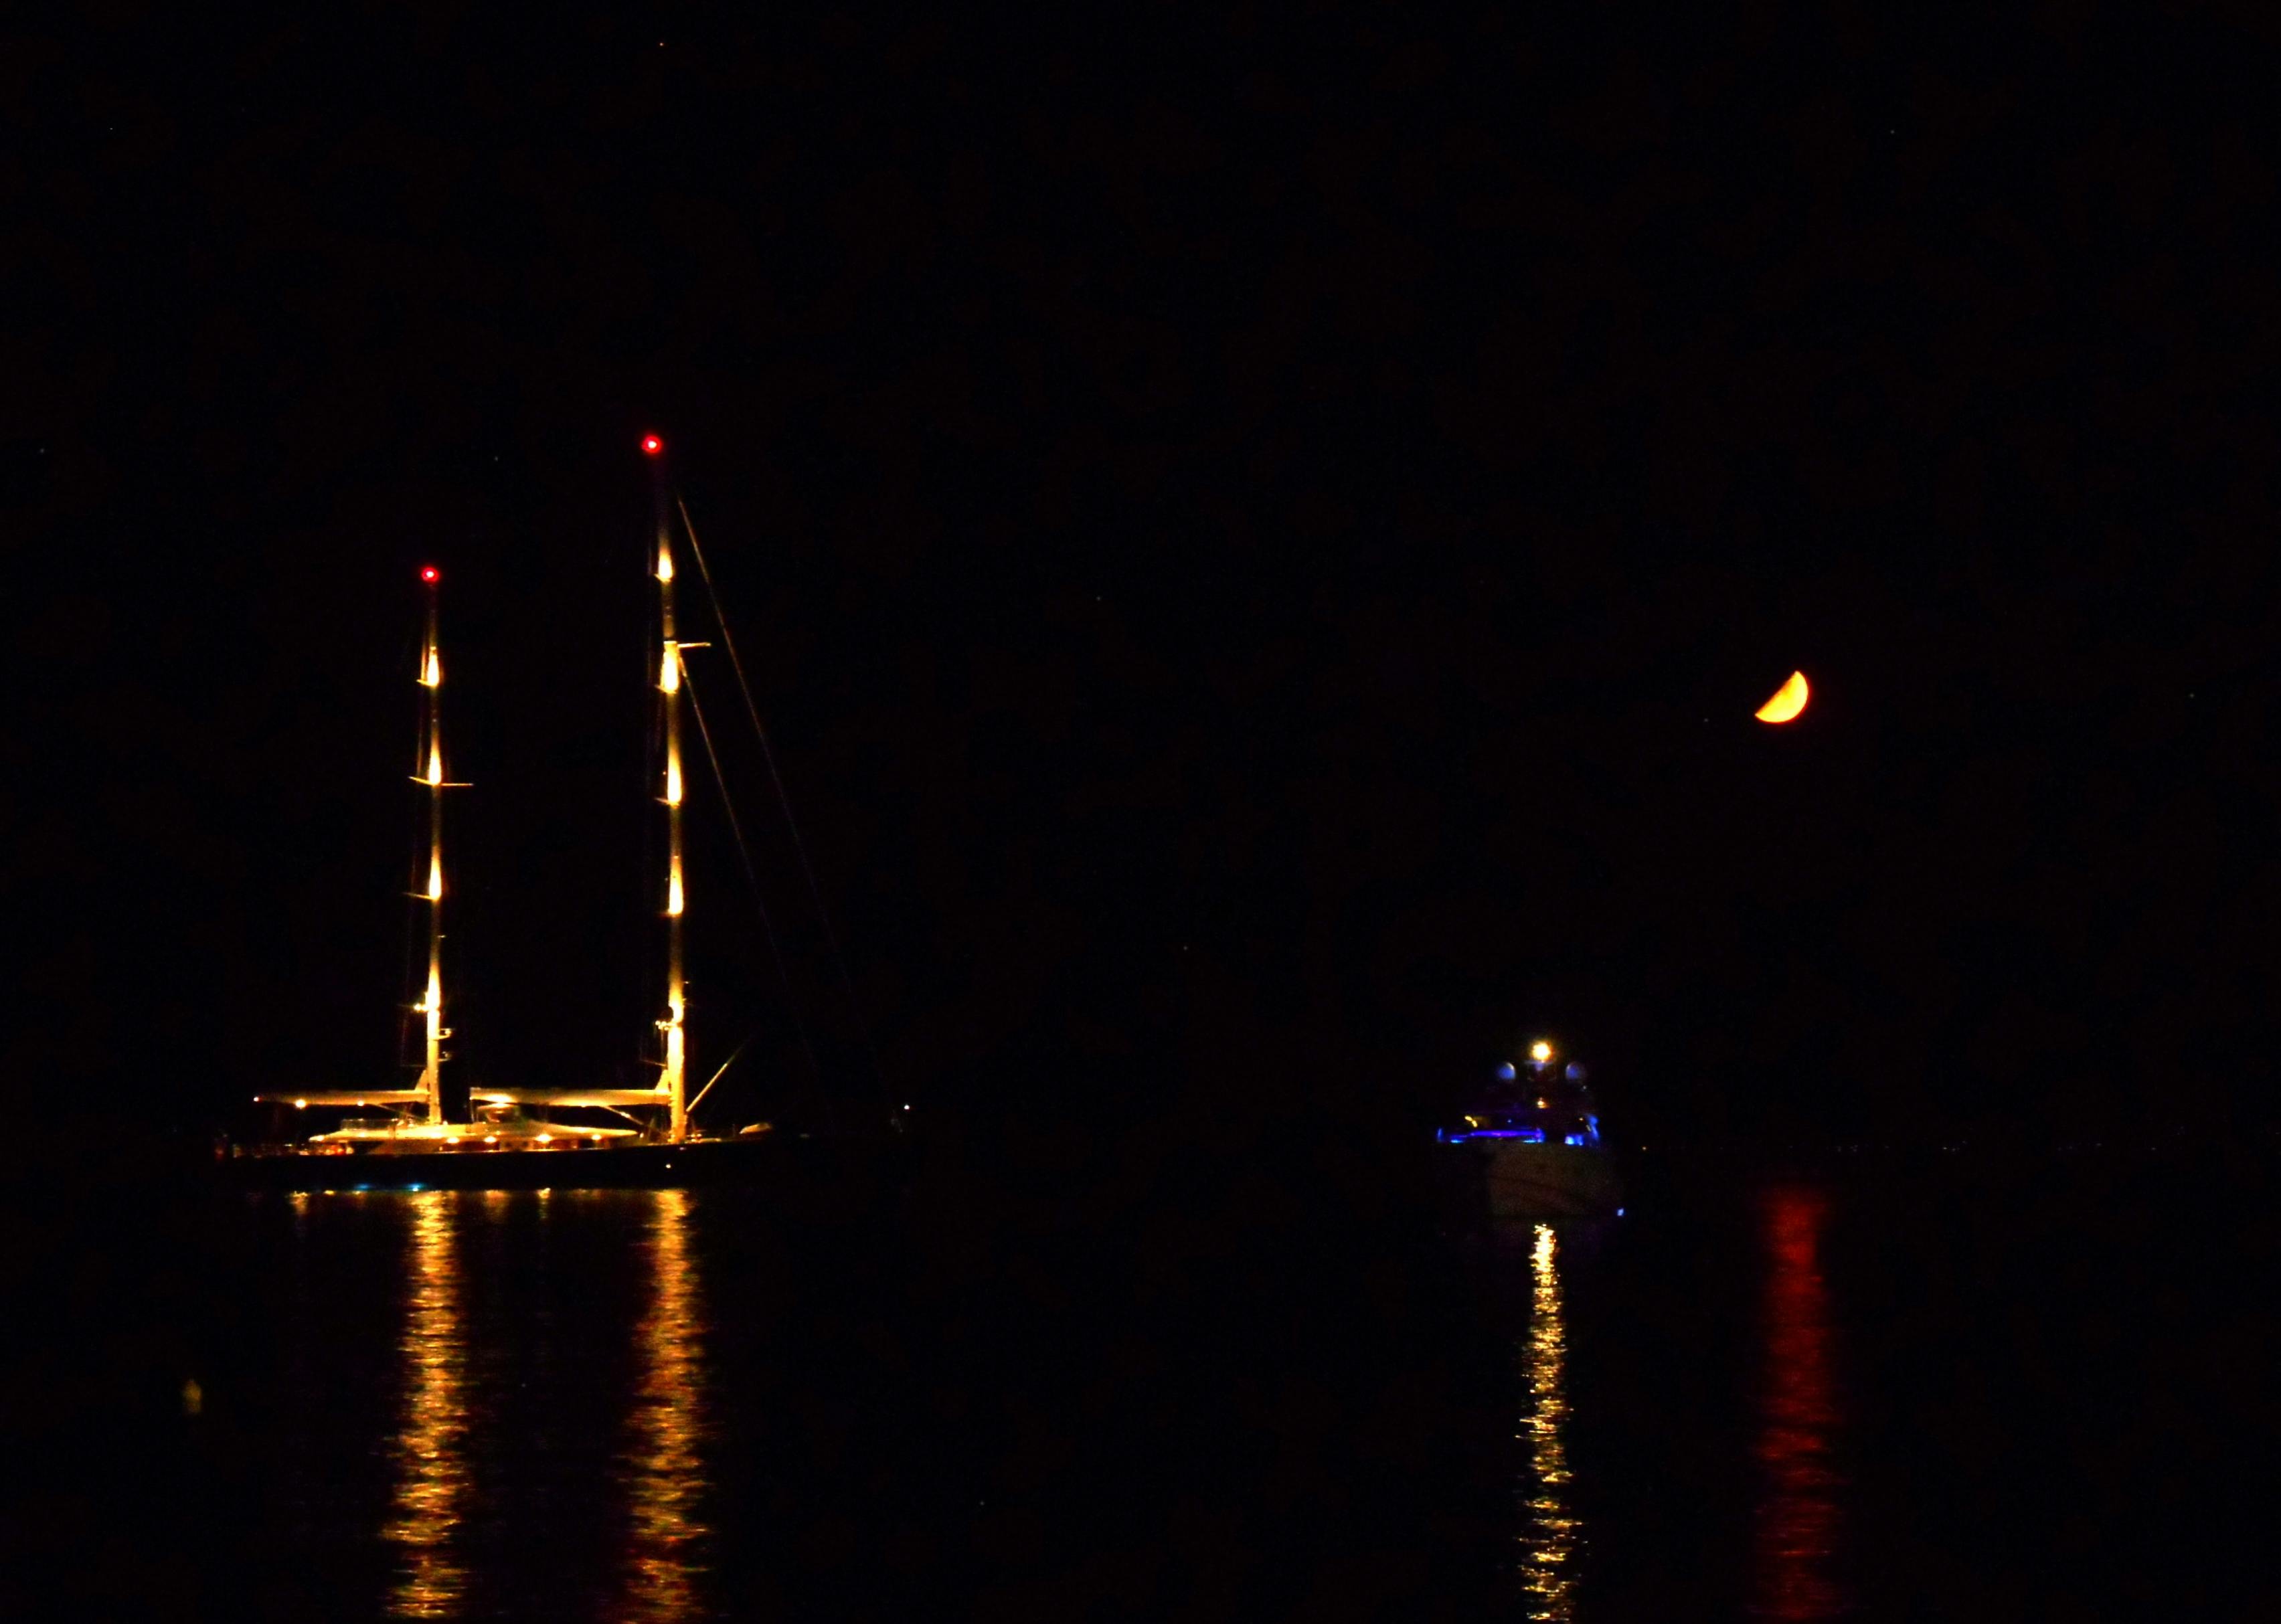 Free stock photo of #ship #sail #night #lights #still #yacht